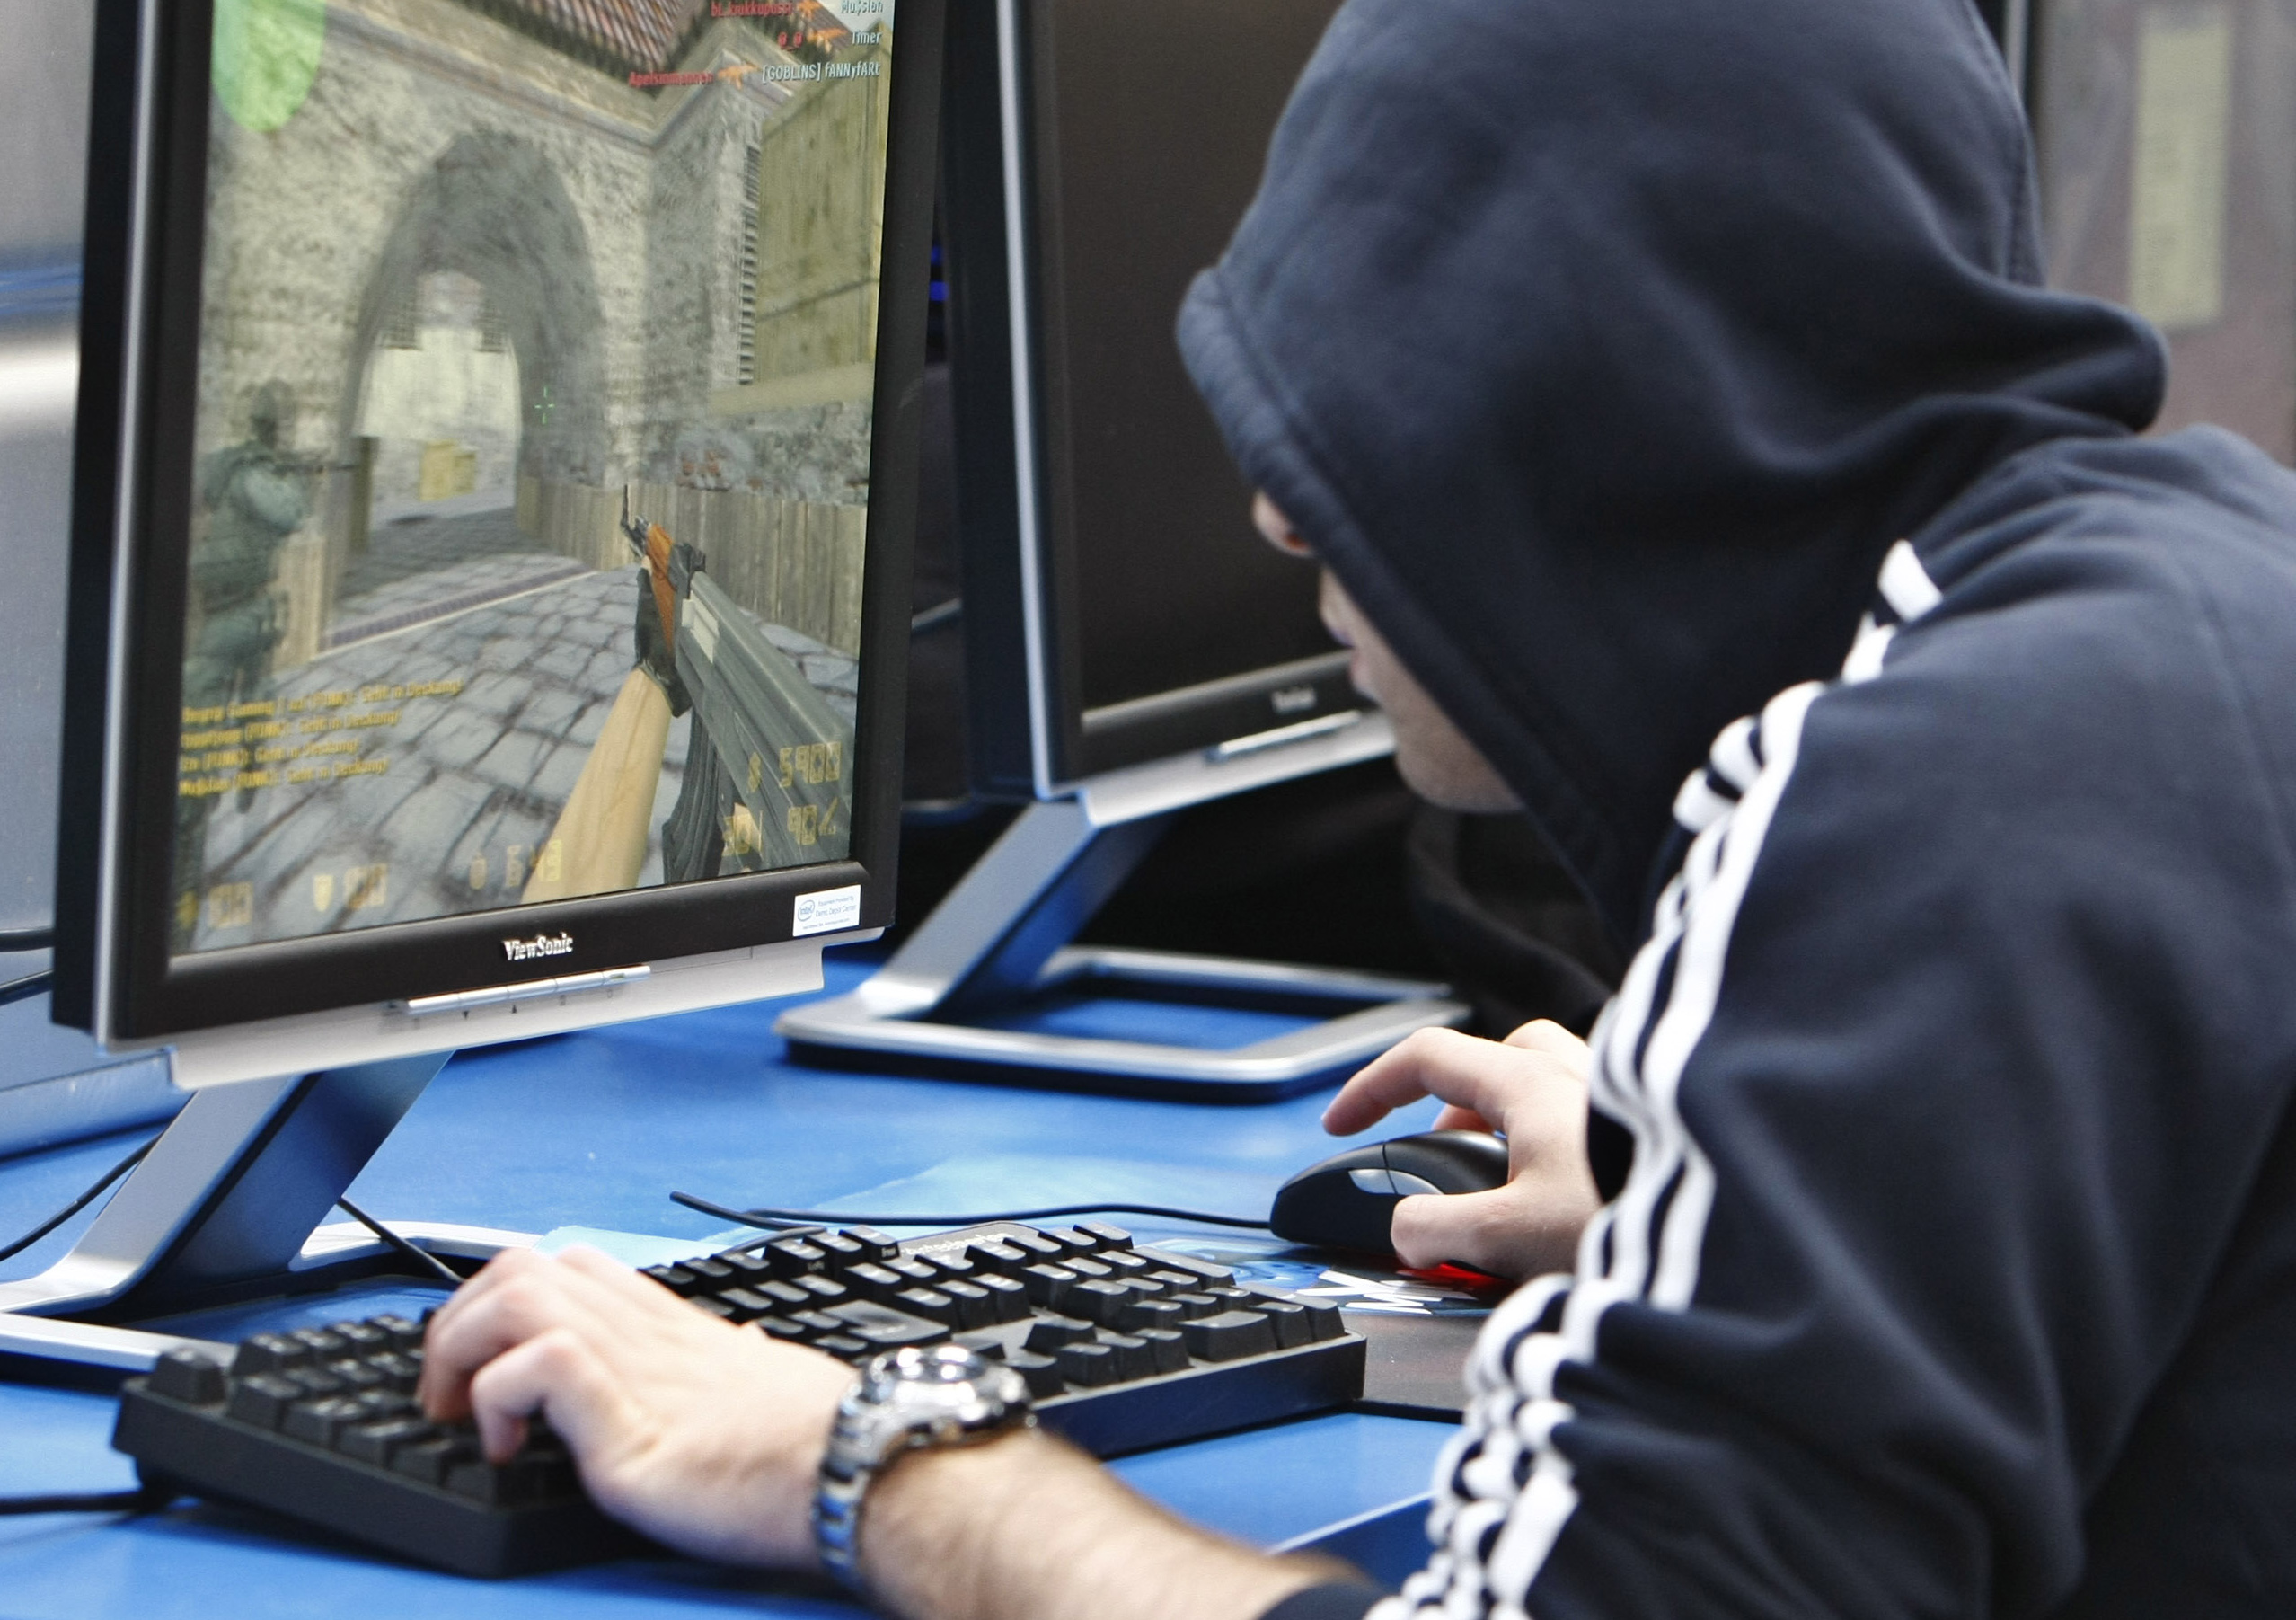 Survey shows Virginia online gamers struggle against insomnia